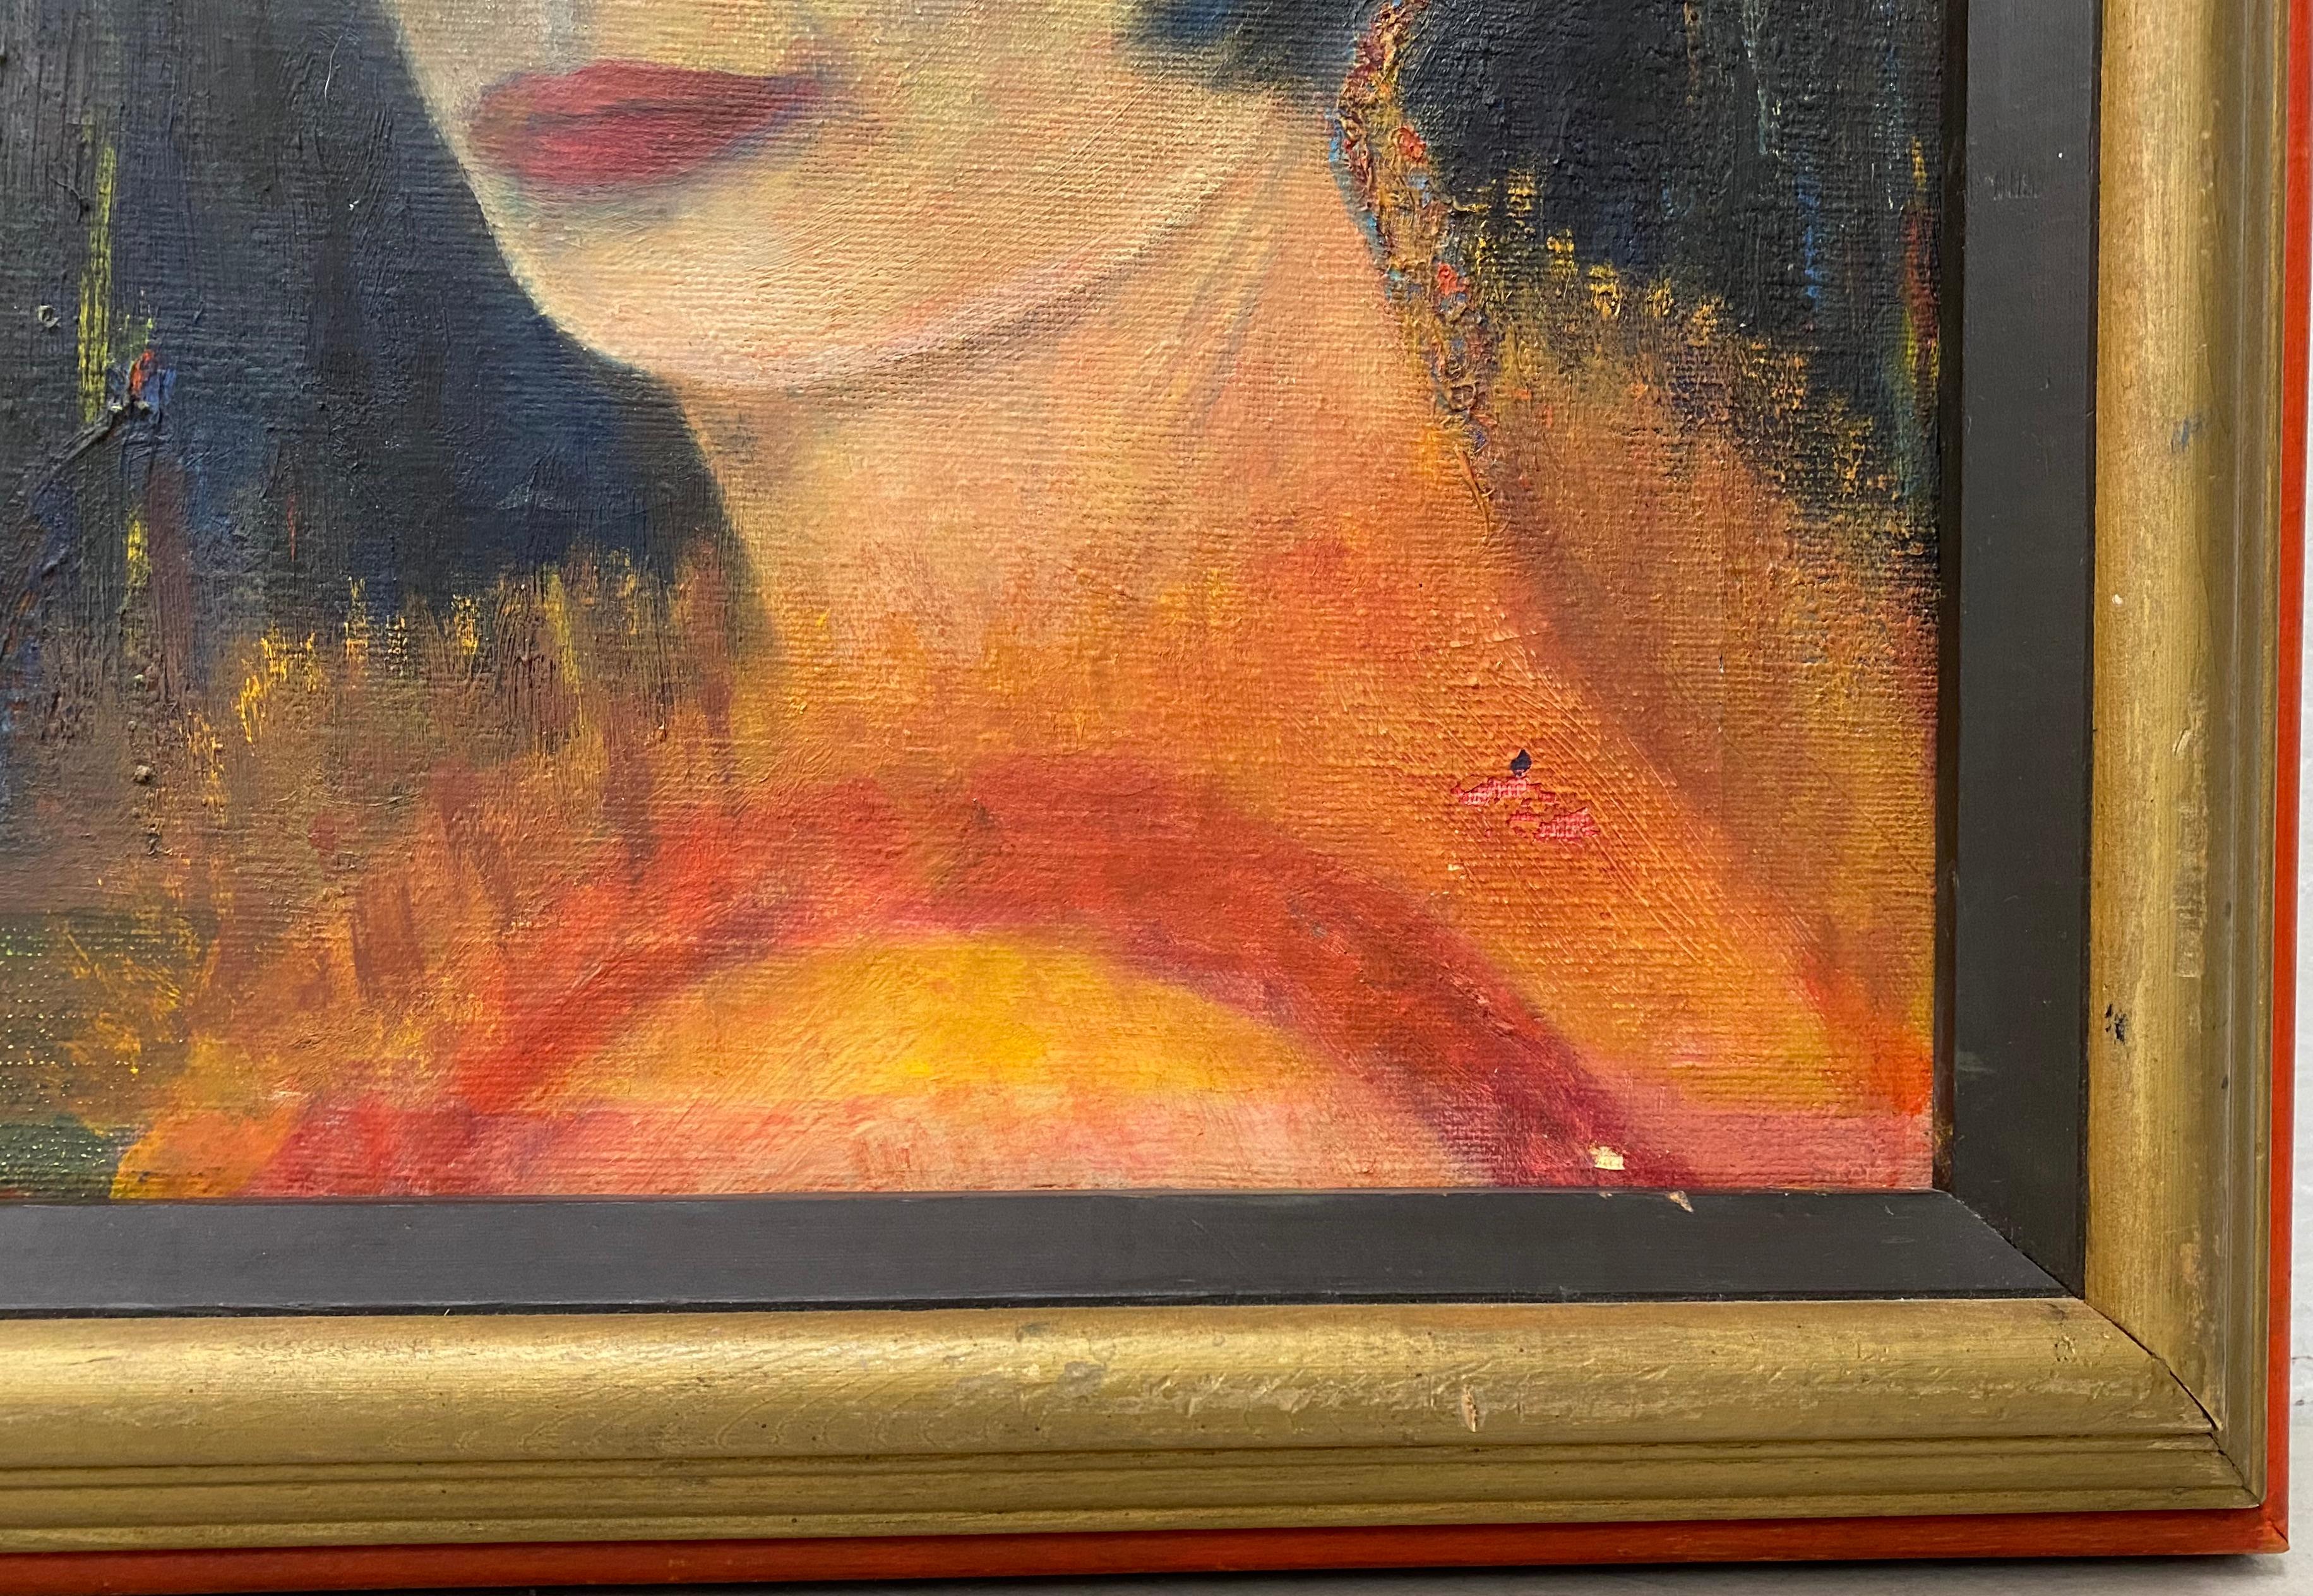 Jennifer Hornyak Portrait of a Woman in Orange C.1980s

Original oil on canvas

Canvas dimensions 18